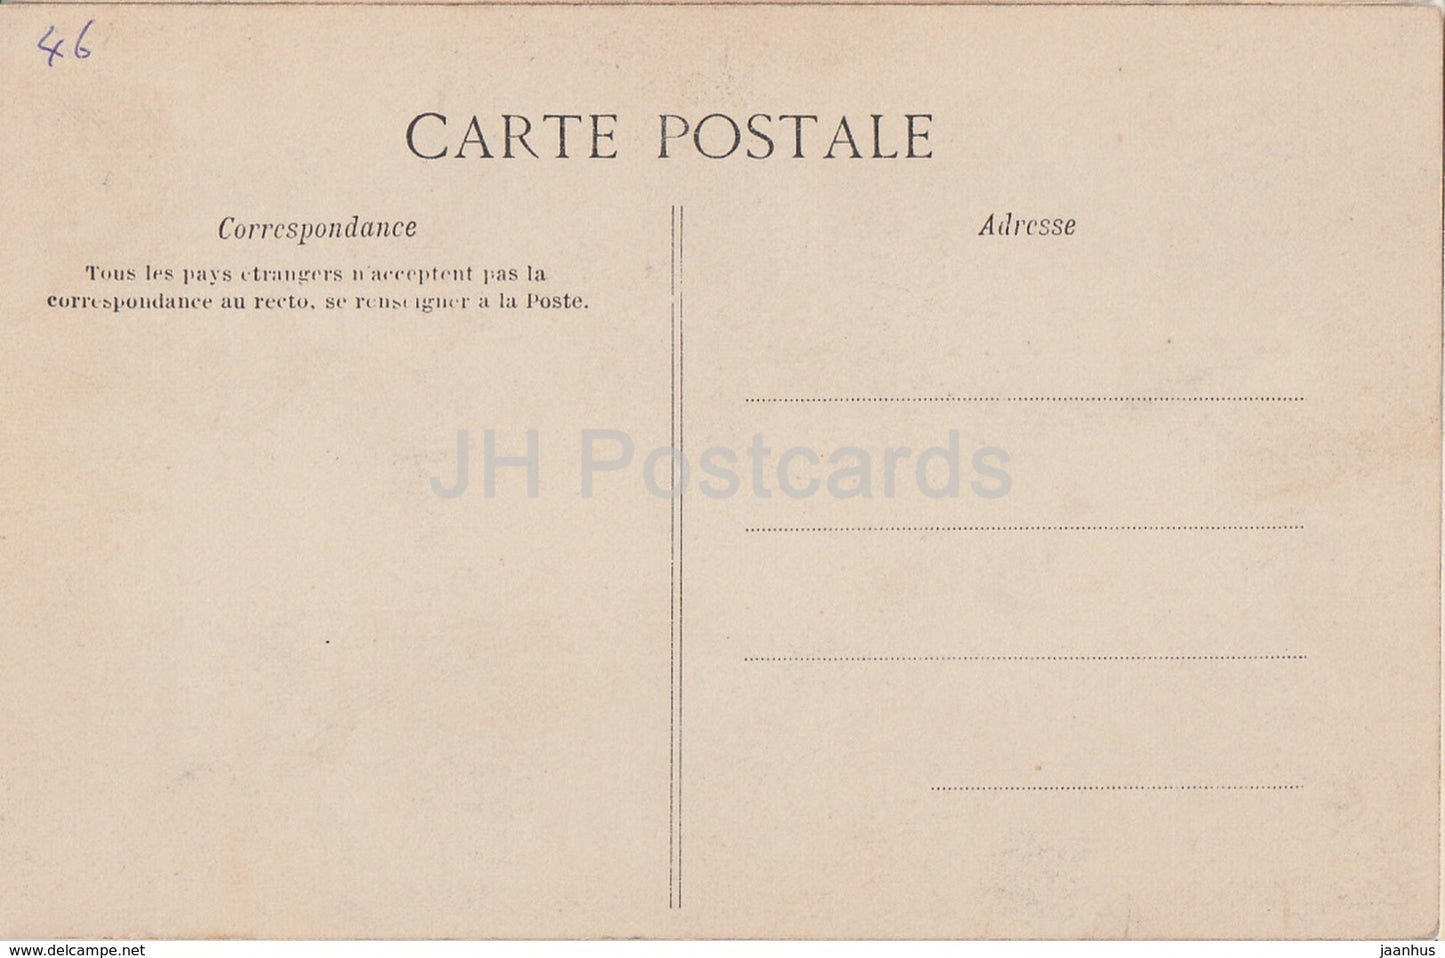 Le Lot Illustre - Betaille - Ruines du Chateau - Burgruine - alte Postkarte - Frankreich - unbenutzt